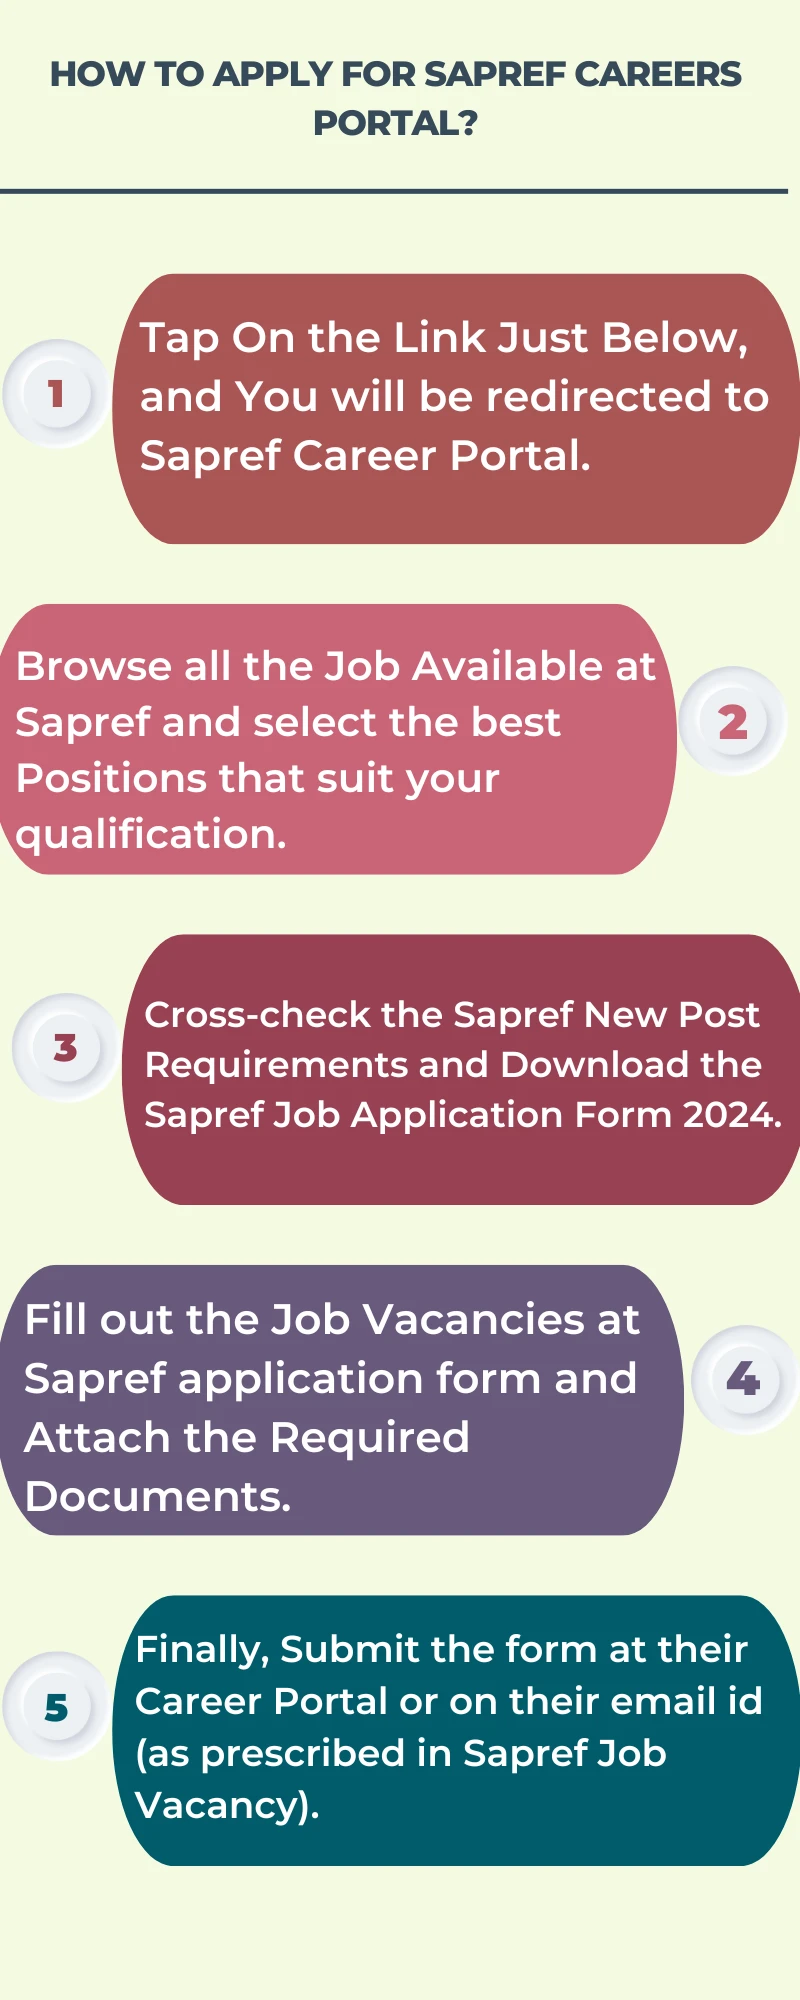 How To Apply for Sapref Careers Portal?